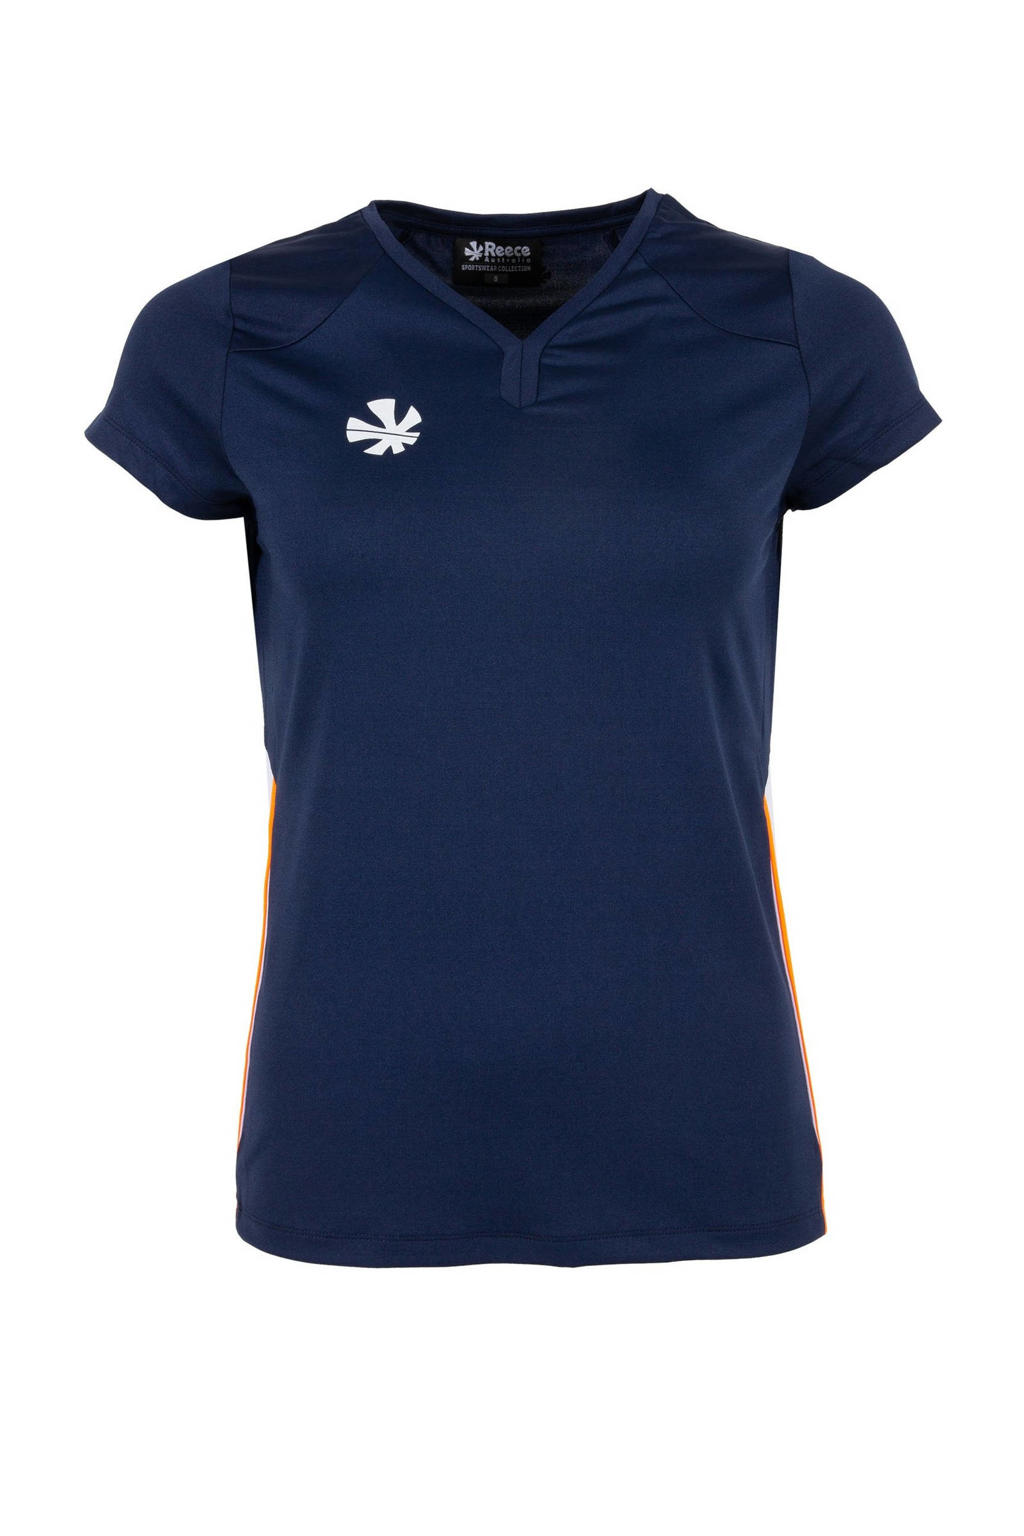 Reece Australia sport T-shirt donkerblauw/oranje/wit